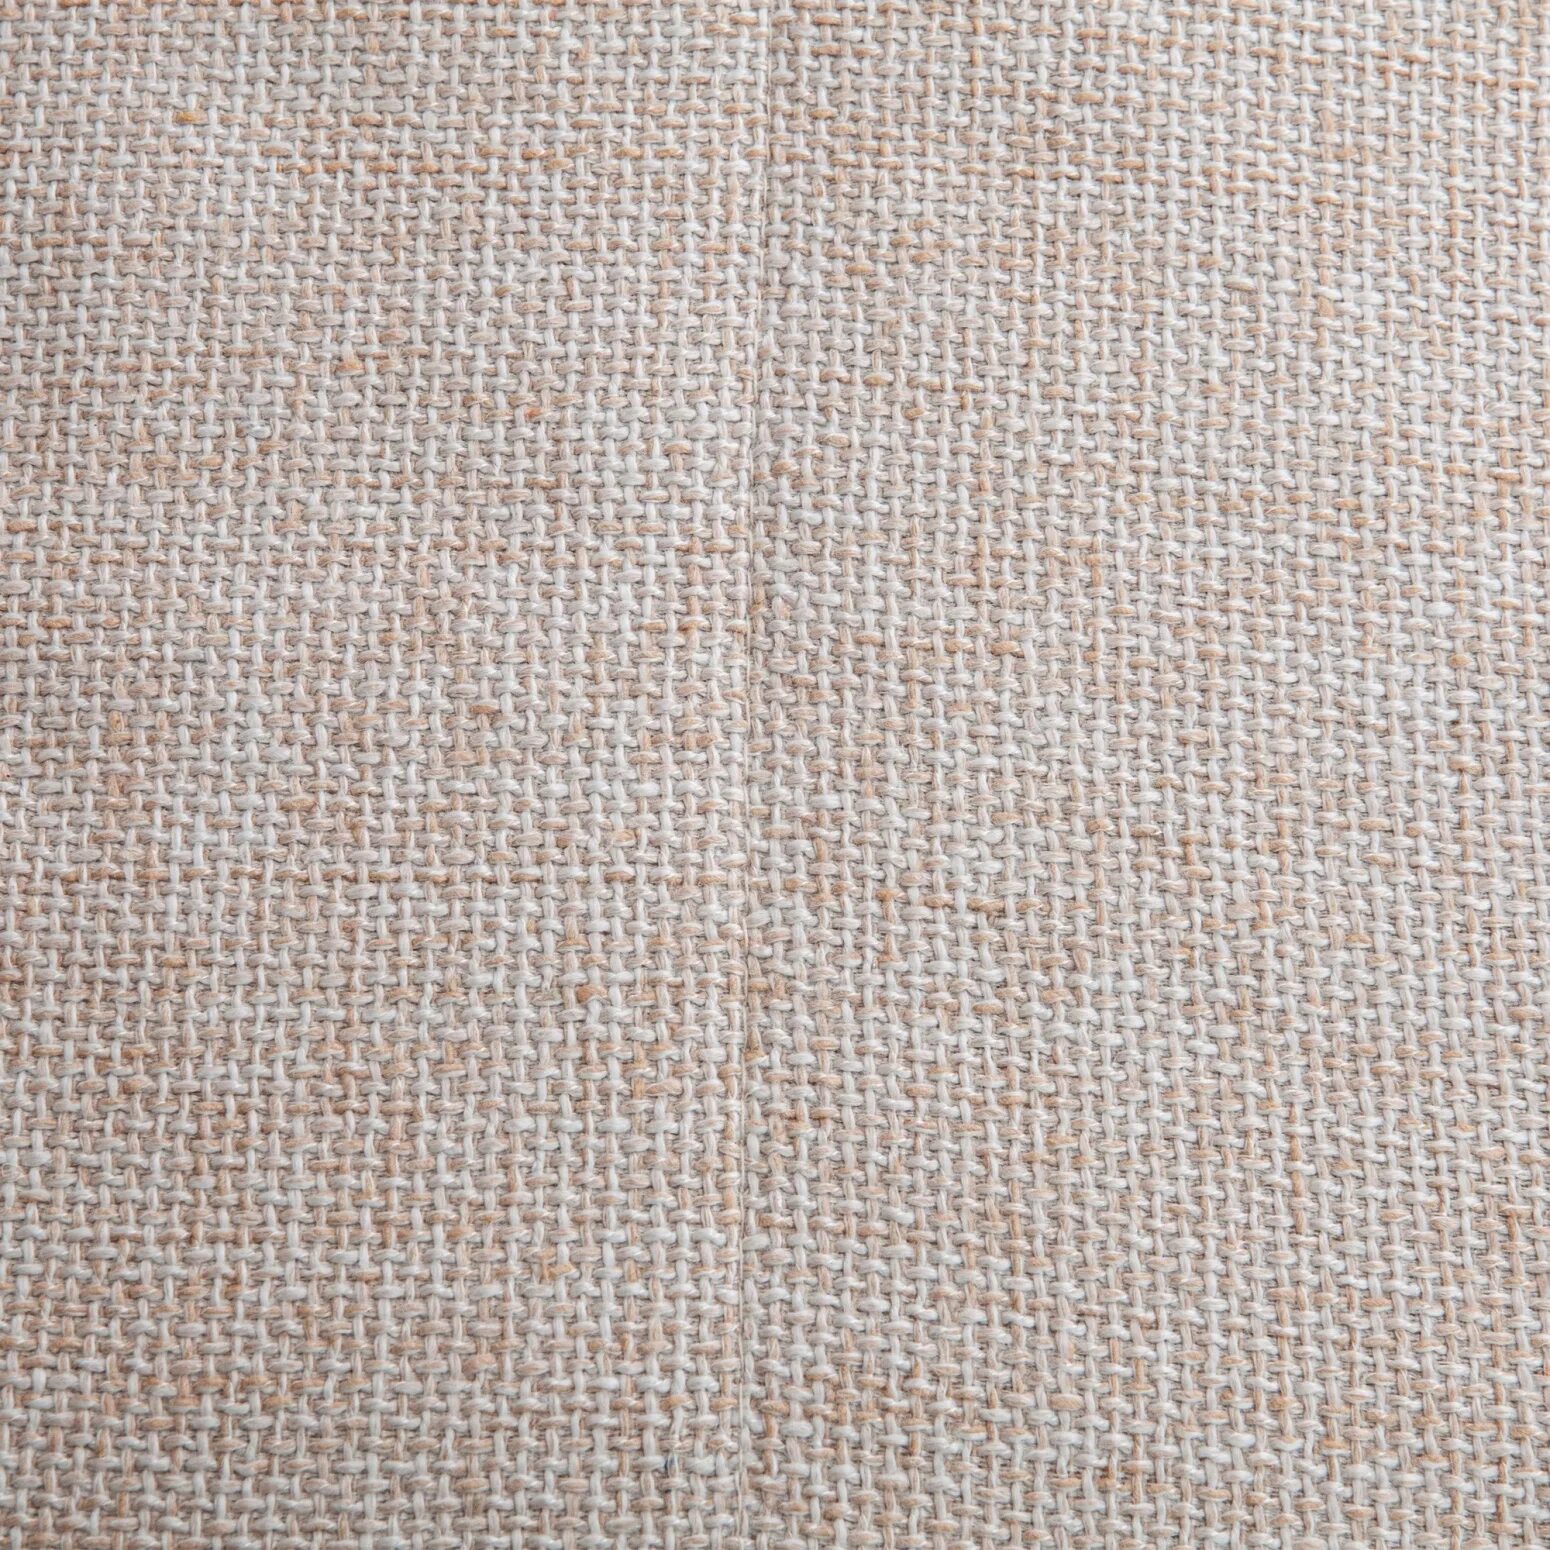 Материал д 6. Ткань Islandia Beige. Текстура ткани. Фактура ткани. Ткань холст текстура.